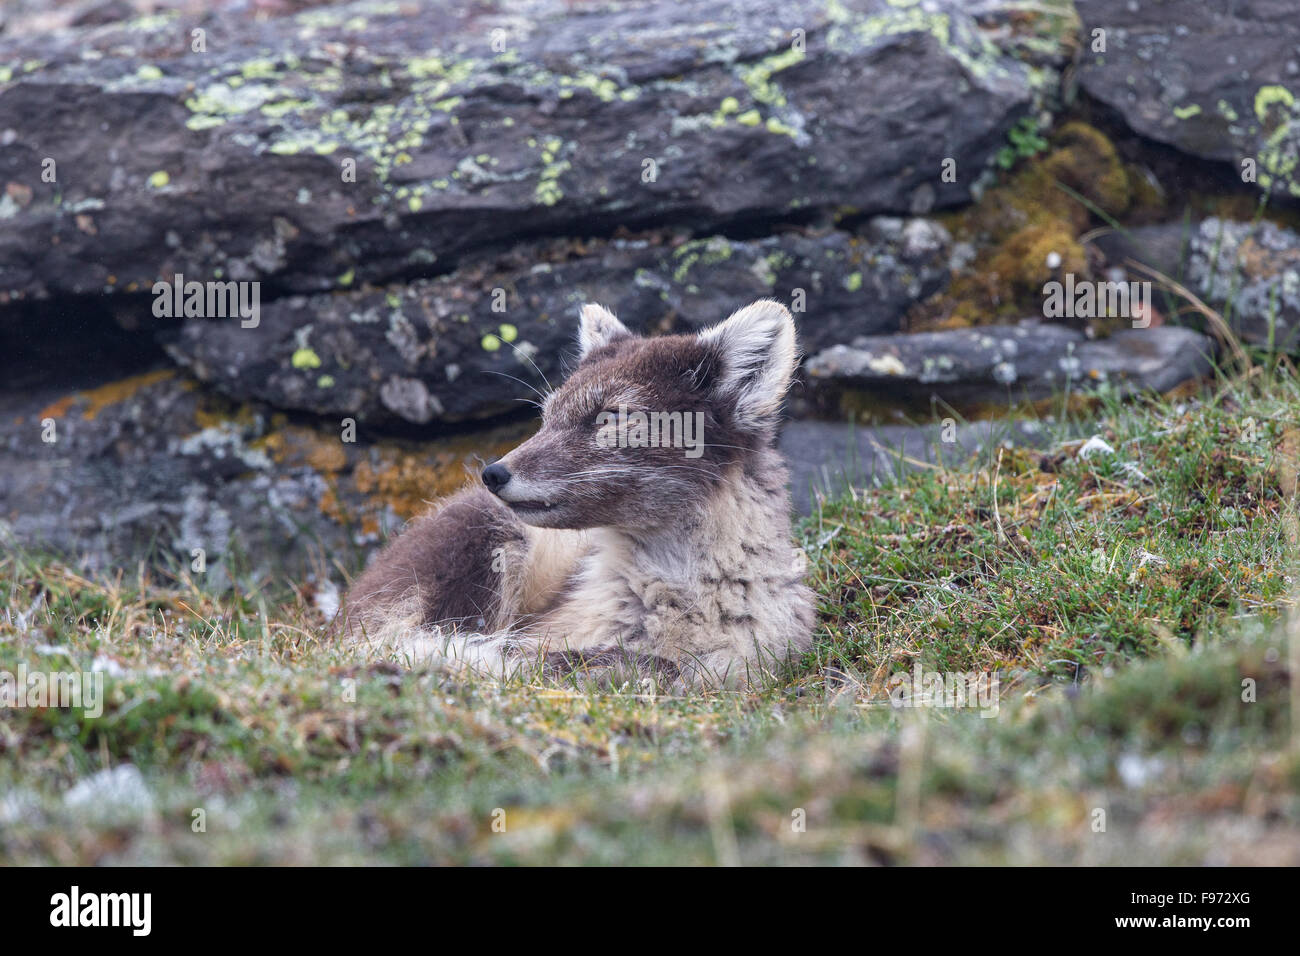 Arctic fox (Alopex lagopus), in summer pelage, Ossian Sarsfjellet (Mount Ossian Sars), Svalbard Archipelago, Arctic Norway. Stock Photo